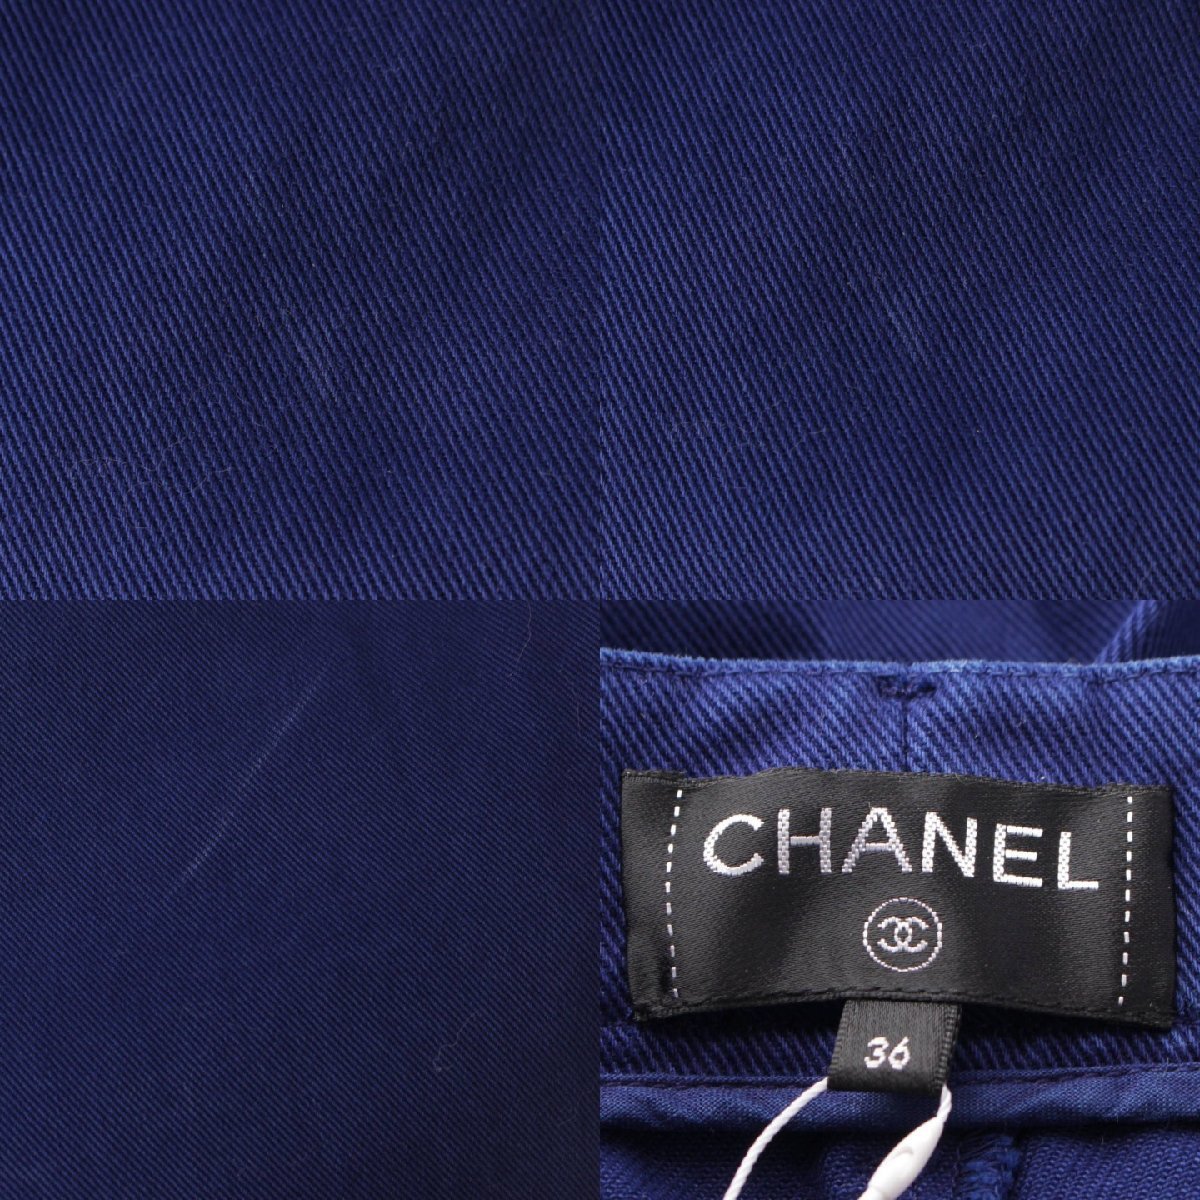 [ Chanel ]Chanel 18 year cotton matelasse ribbon high waist wide Denim pants P58416 blue 36 [ used ][ regular goods guarantee ]200507